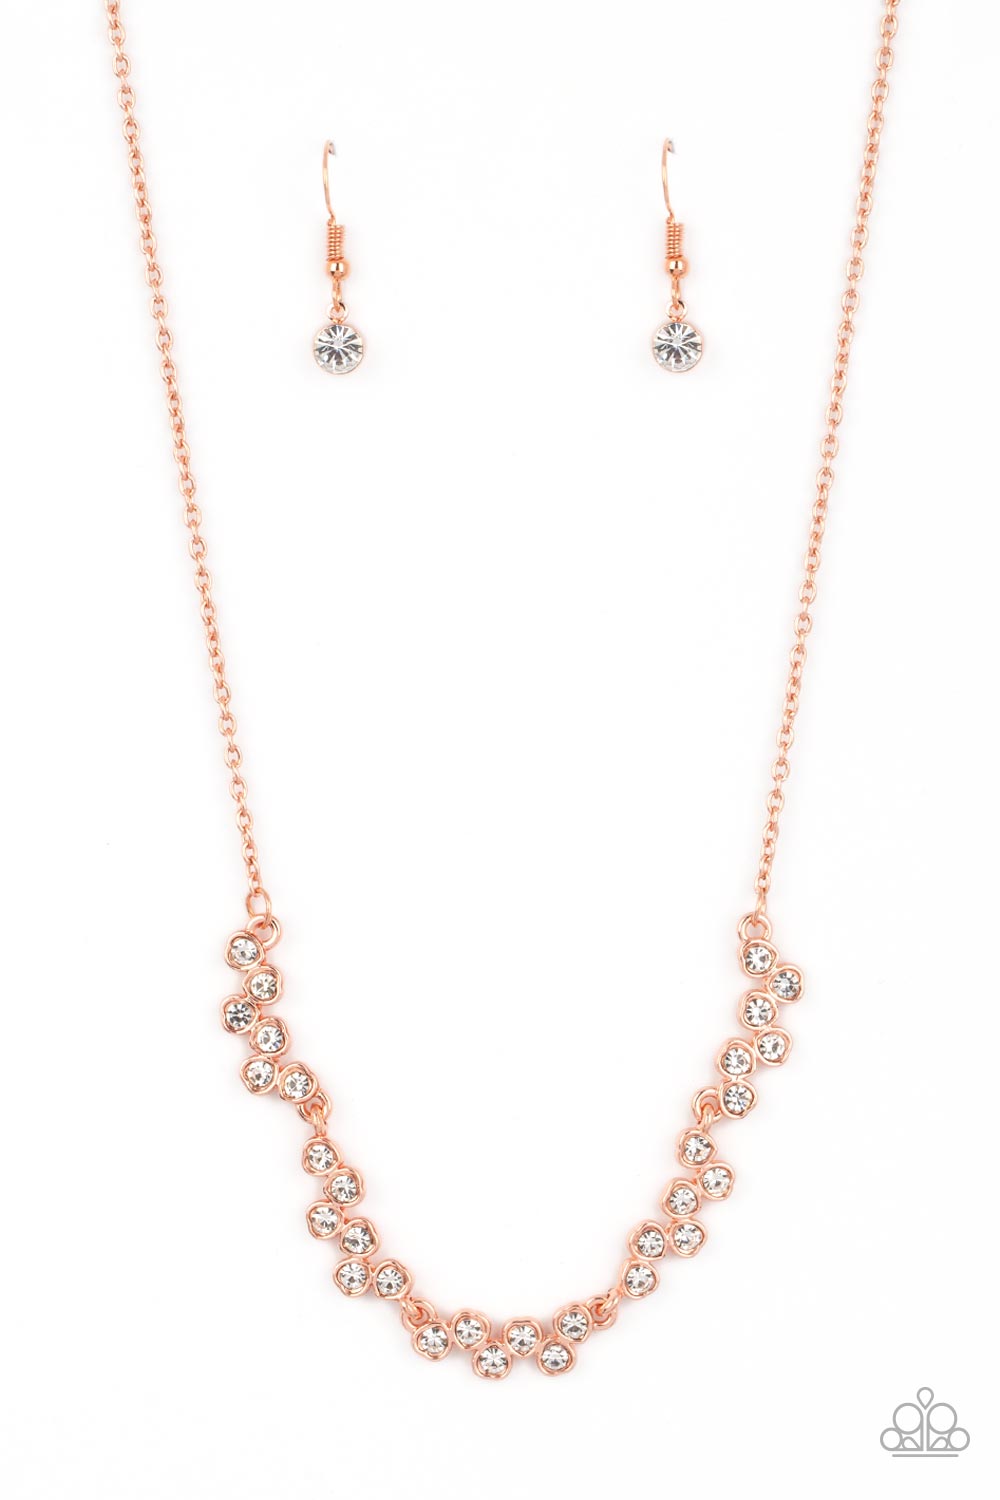 SELFIE-Love - Copper Necklace